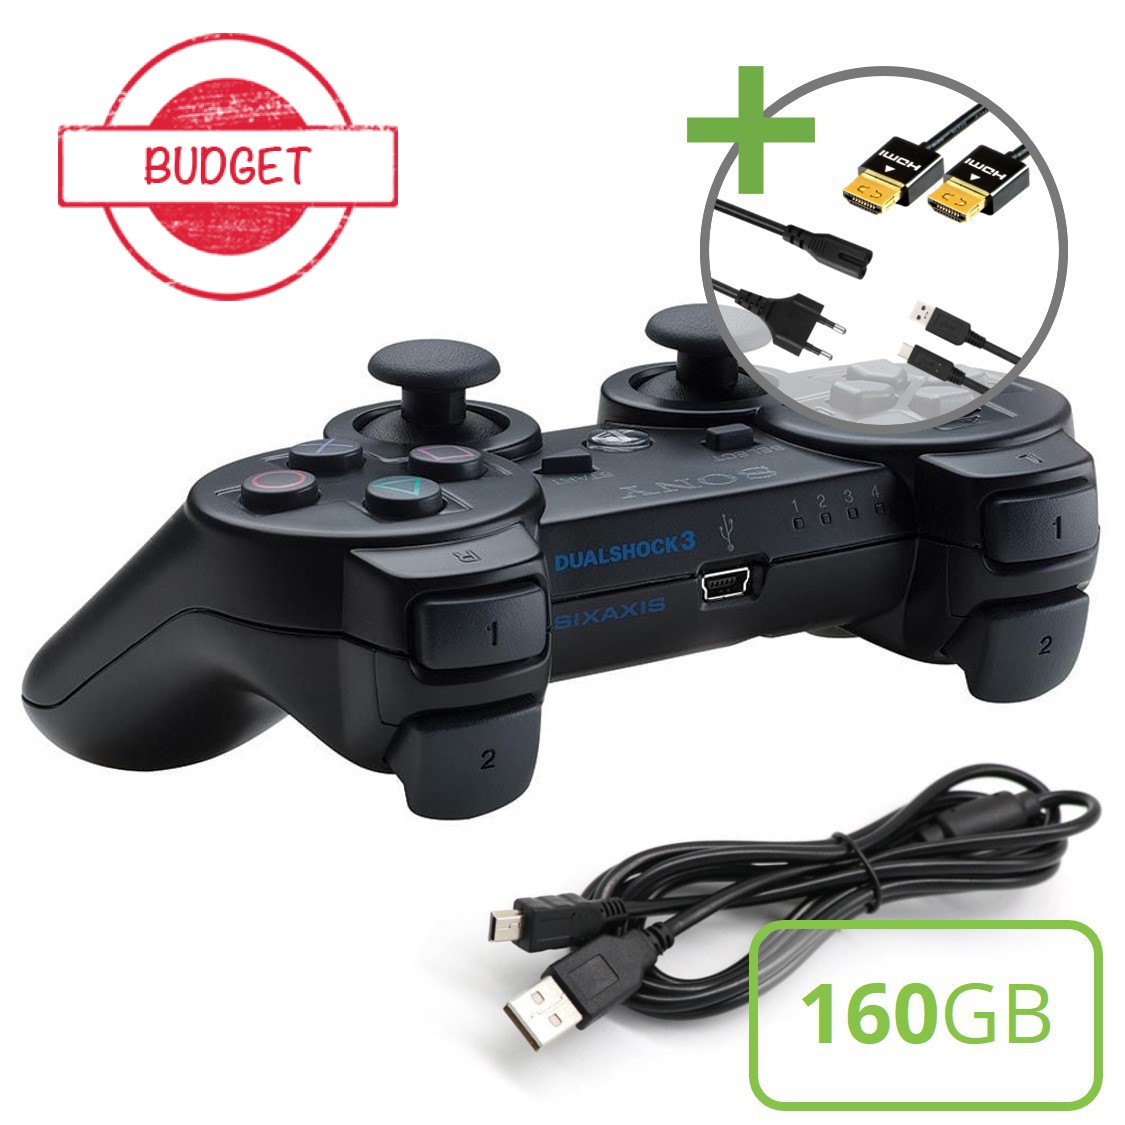 Sony PlayStation 3 Slim (160GB) Starter Pack - DualShock Edition - Budget - Playstation 3 Hardware - 4